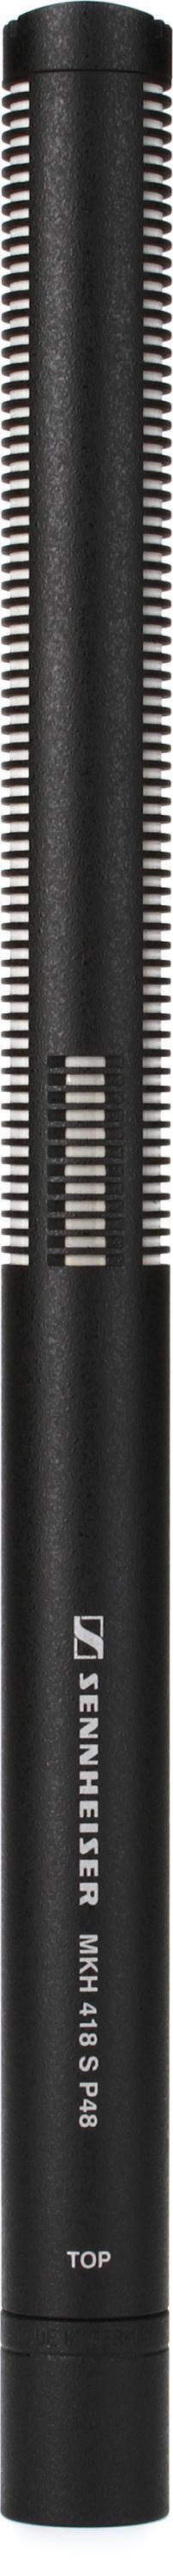 Sennheiser MKH 418-S Stereo Shotgun Condenser Microphone